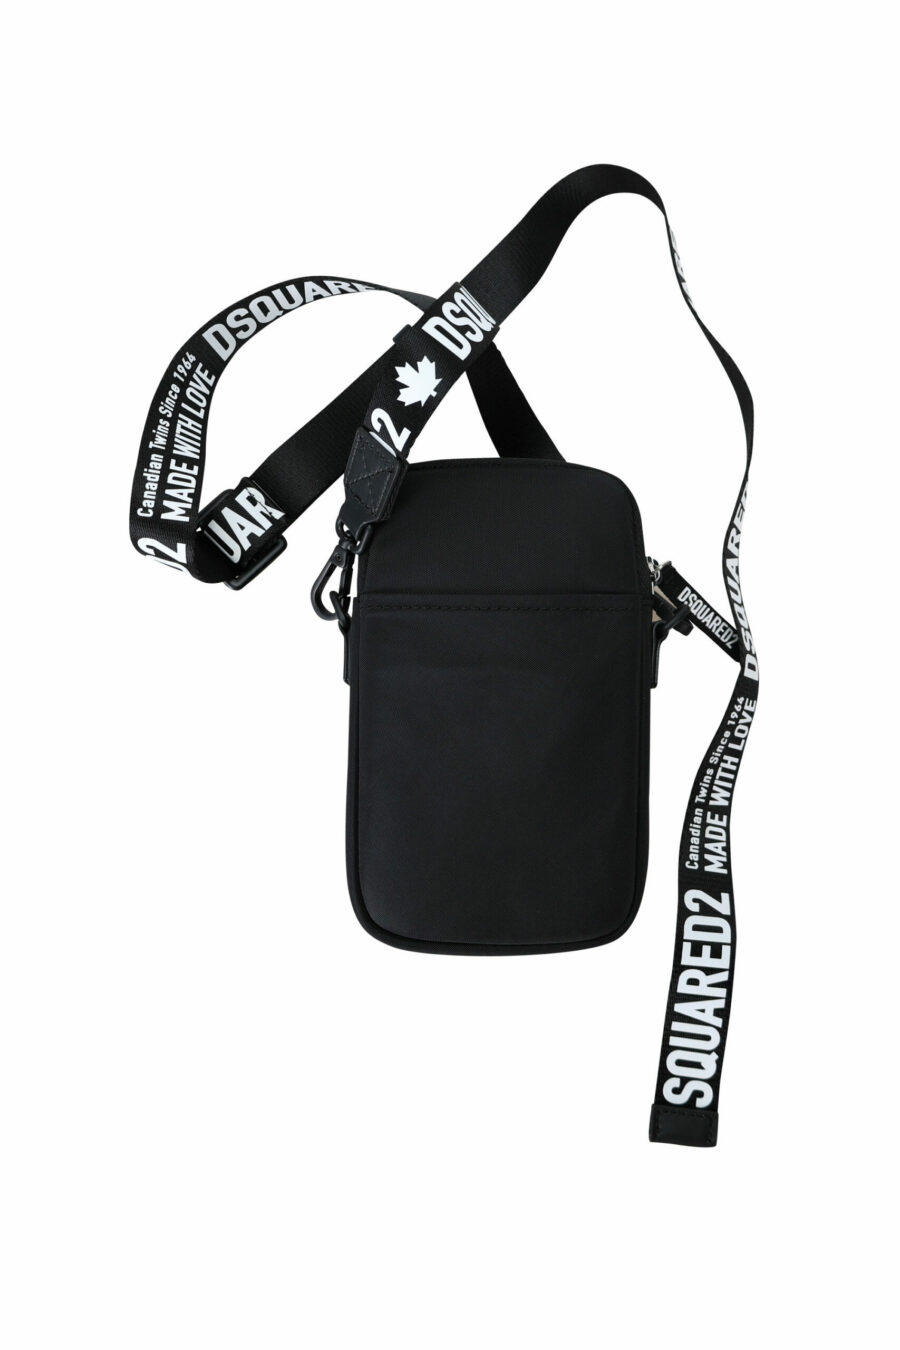 Mini crossbody bag with logo - 8055777228845 1 scaled